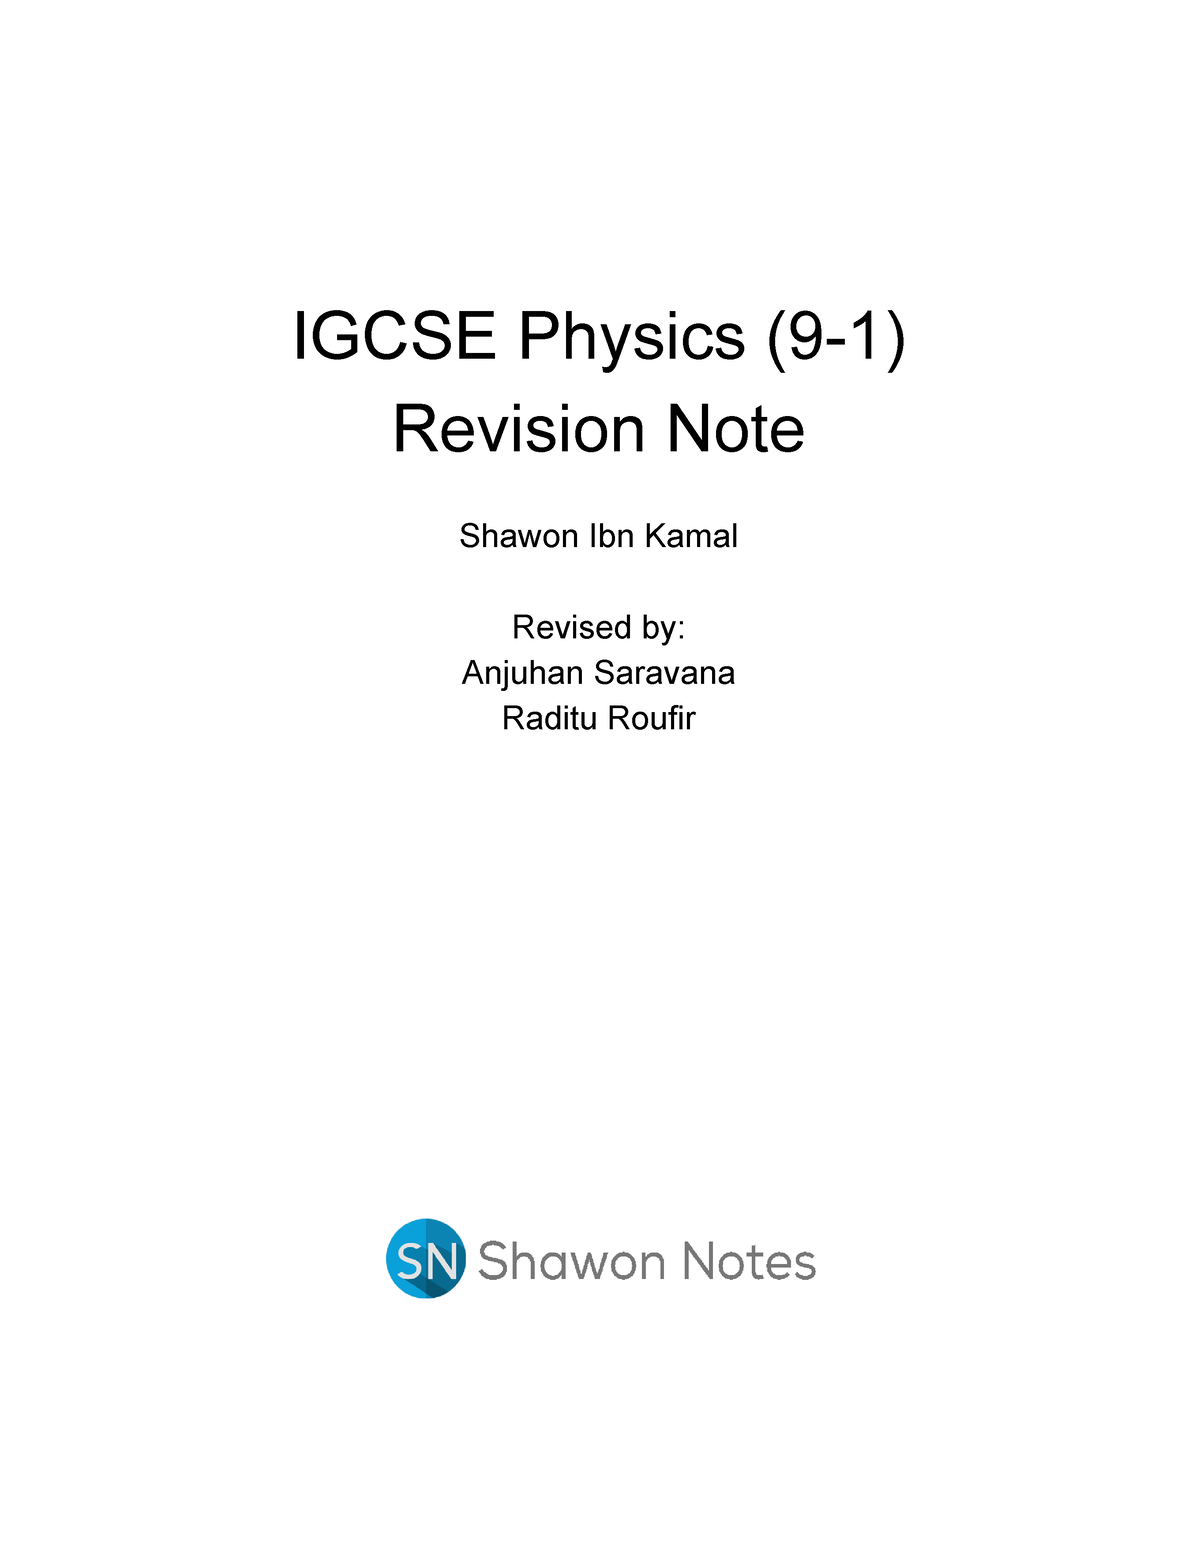 edexcel-igcse-physics-revision-note-igcse-physics-9-1-revision-note